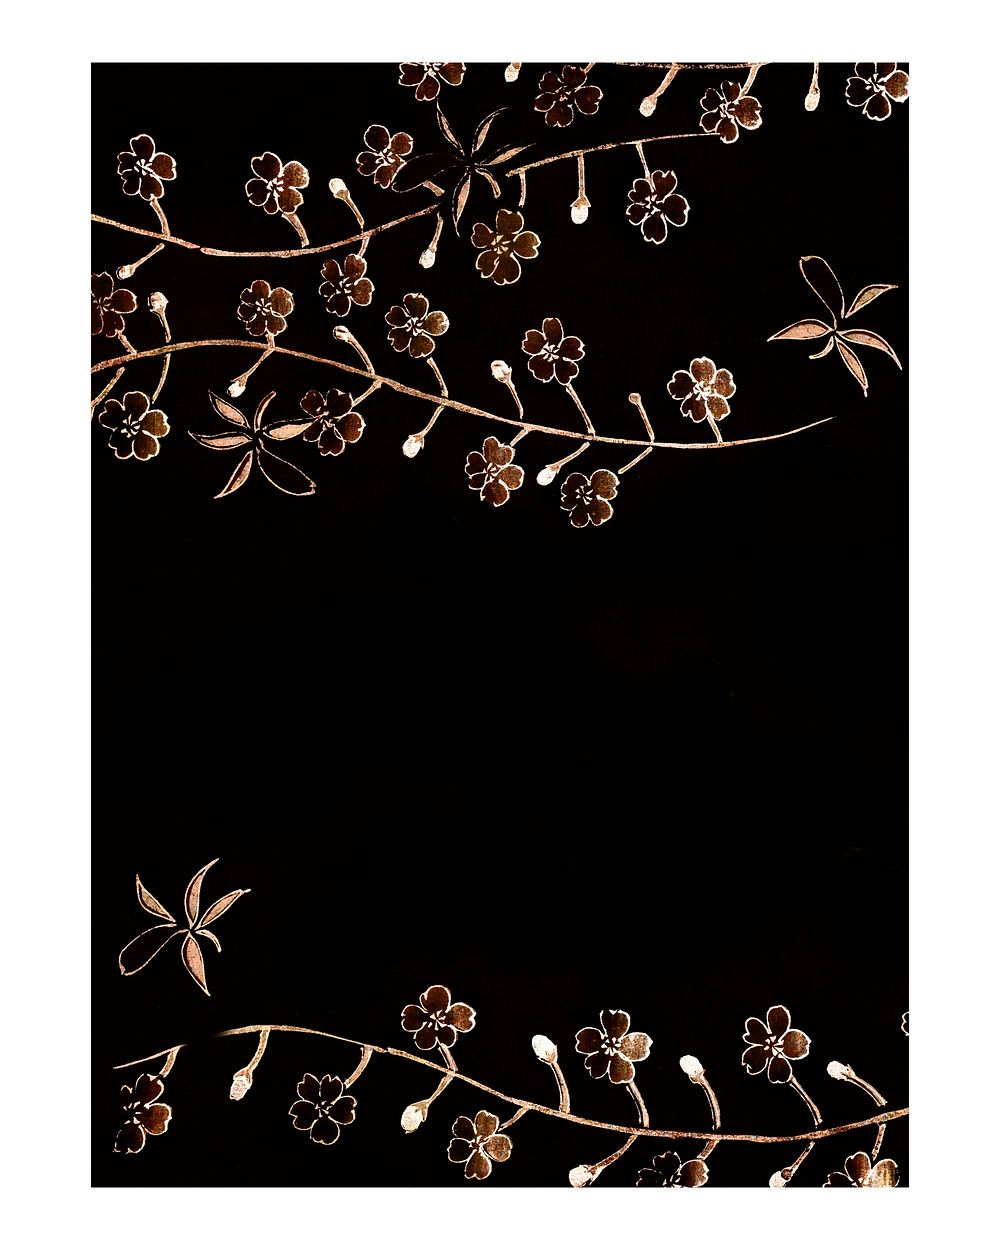 Gold cherry blossom vintage illustration wall art print and poster design remix from original artwork.